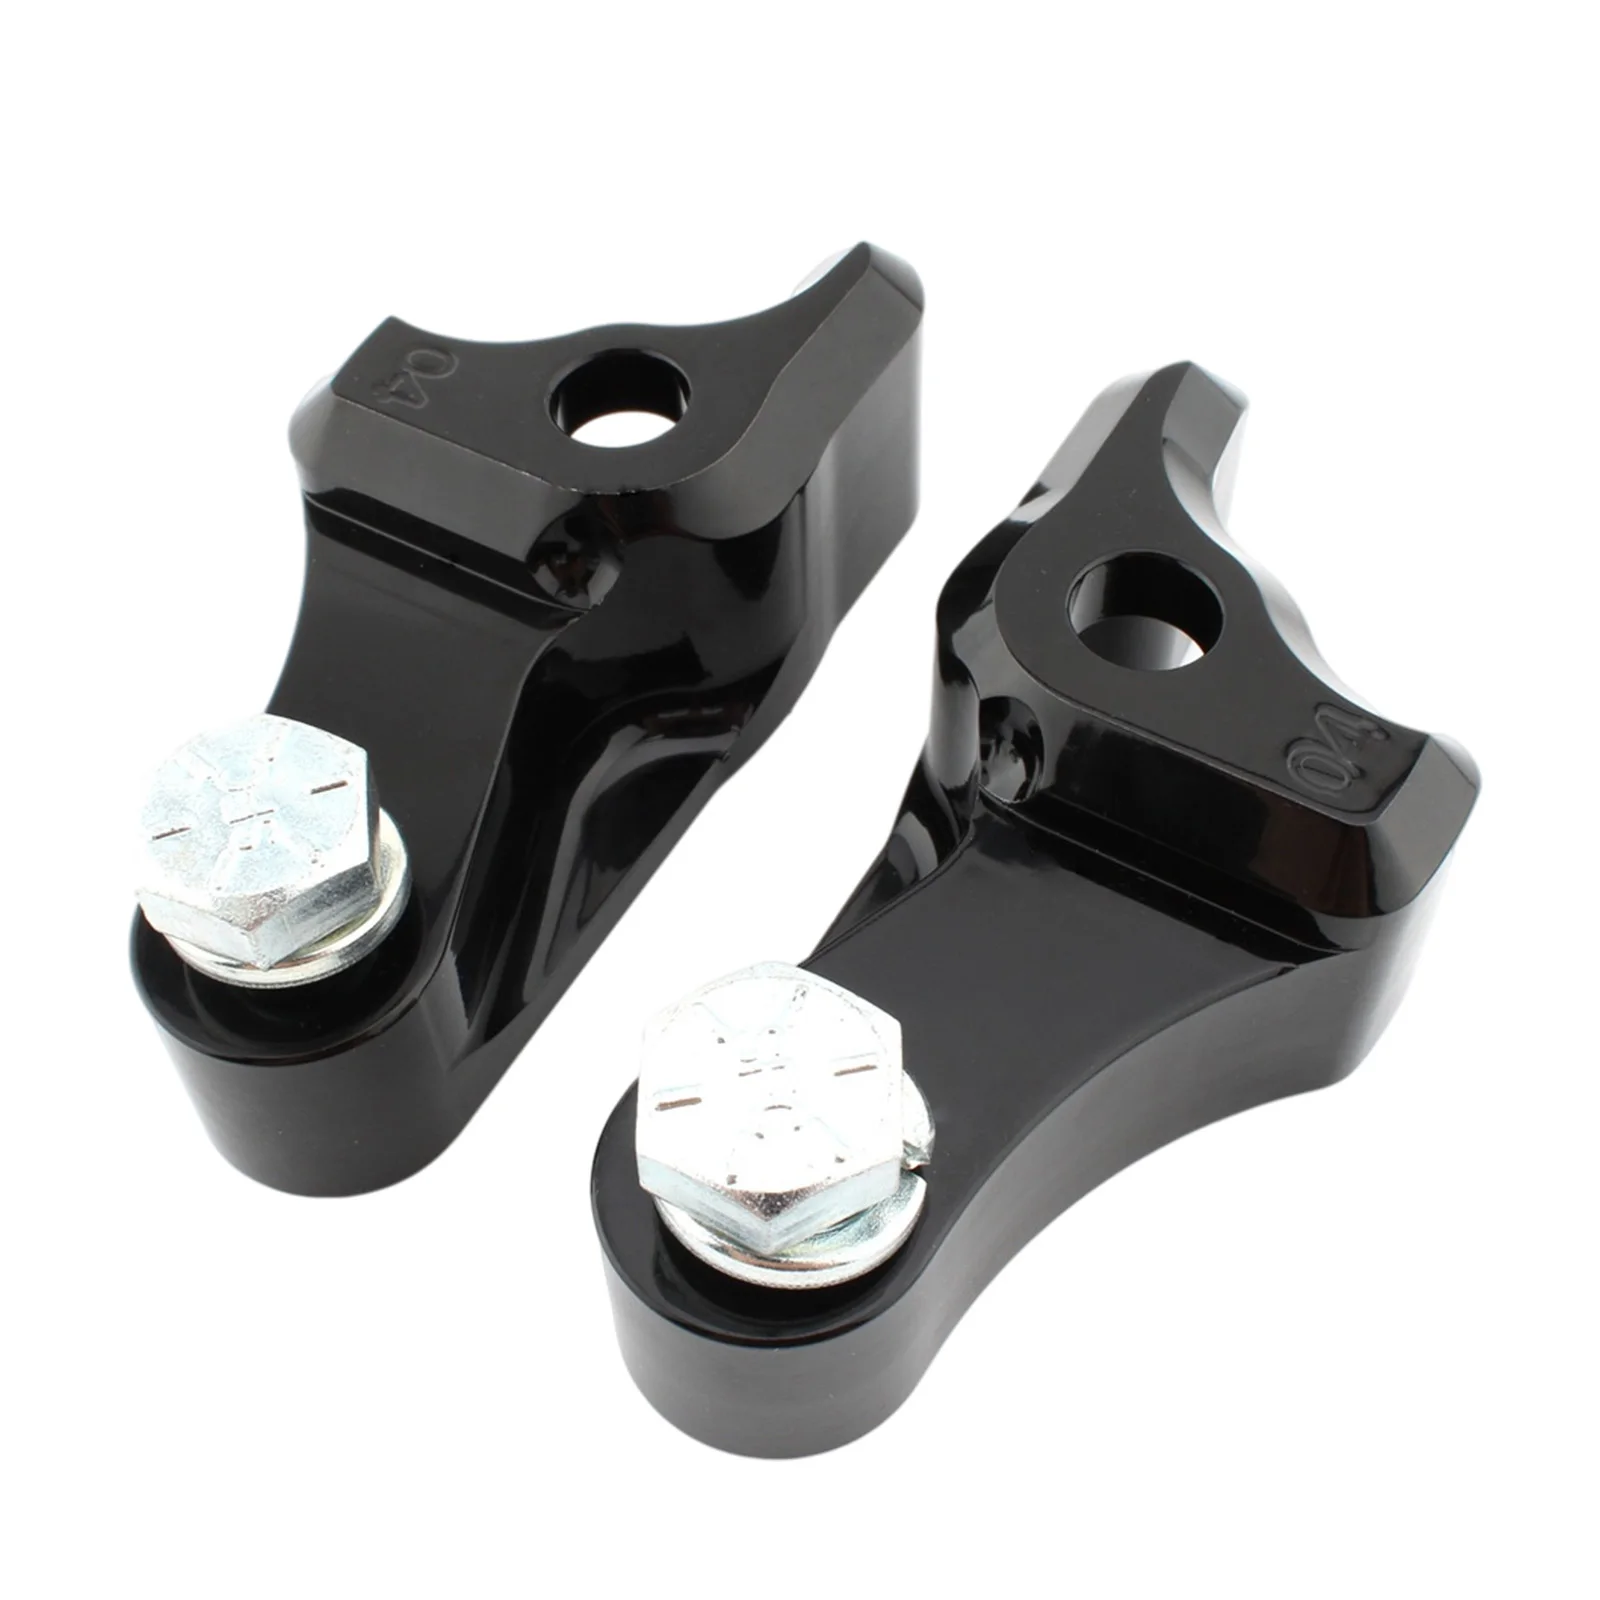 Black Rear Lowering Kit Fit for FLTRU 2011 - 2013 Motorbike Parts Accessories